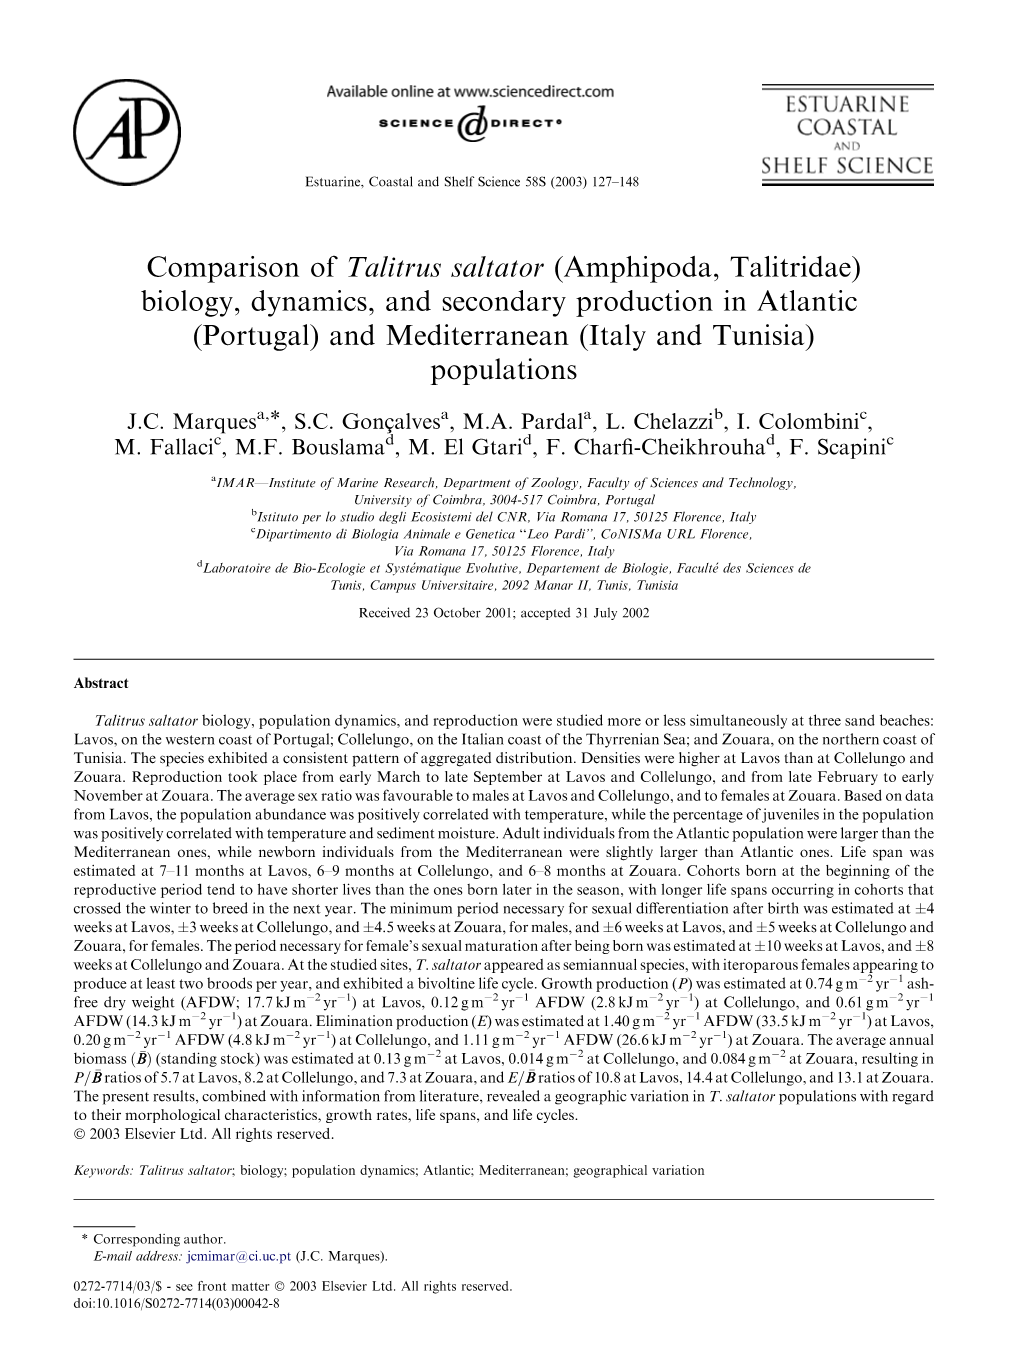 Comparison of Talitrus Saltator (Amphipoda, Talitridae) Biology